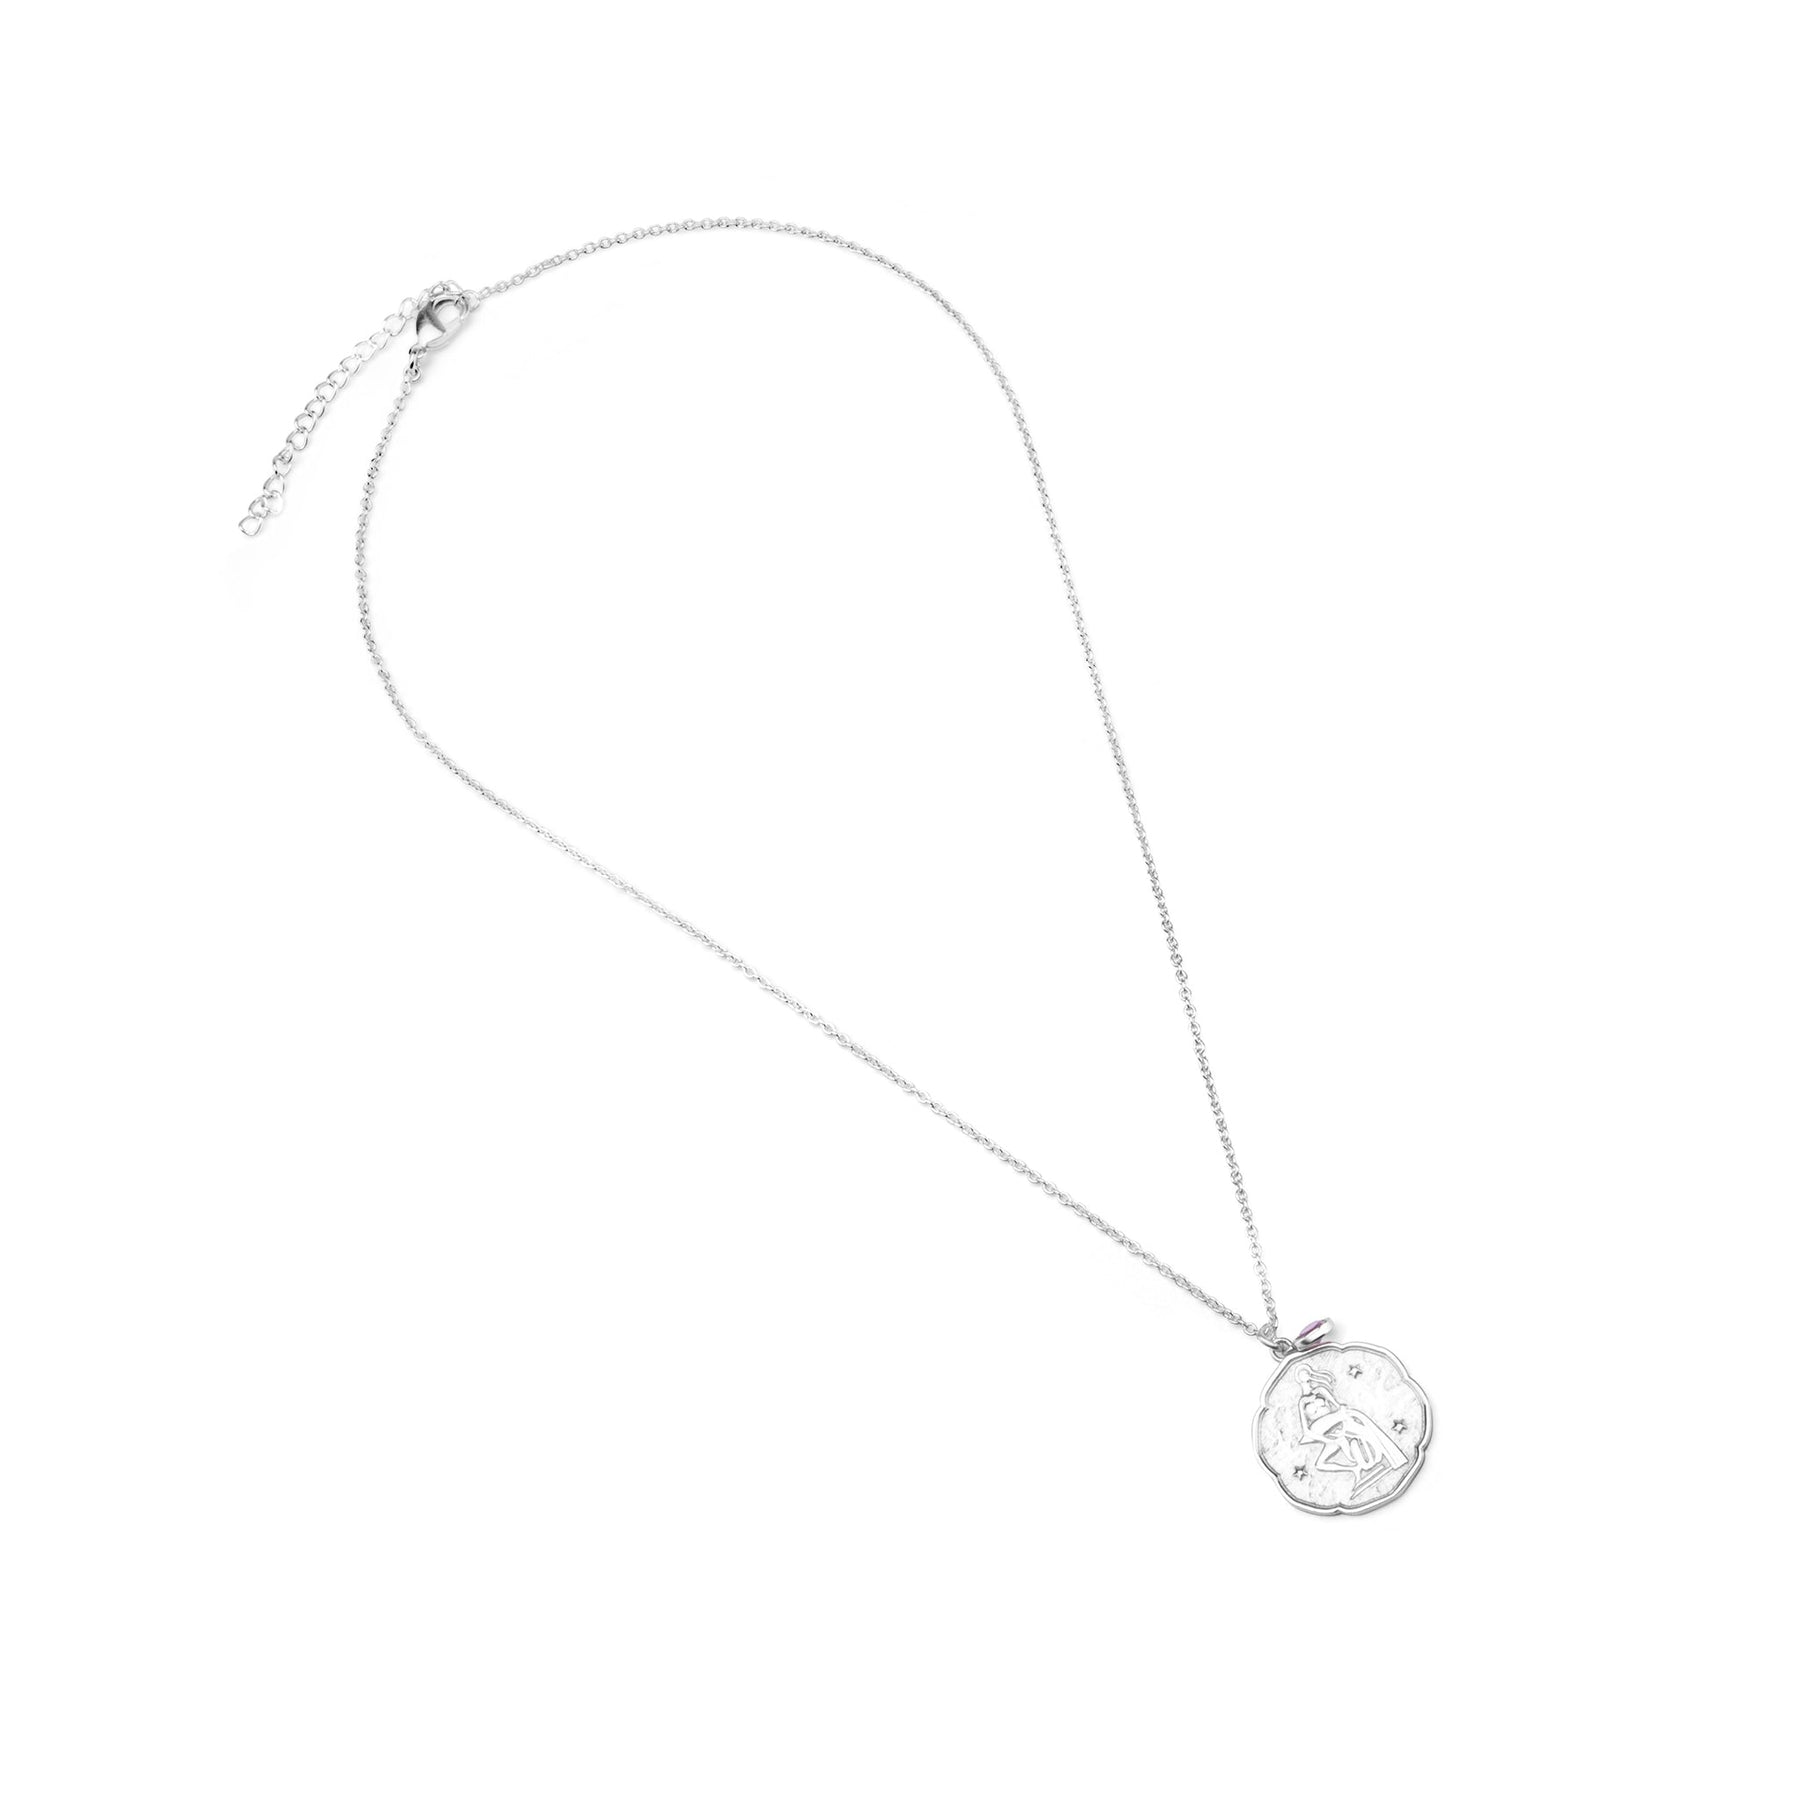 Aquarius Necklace With Birth Stone Charm